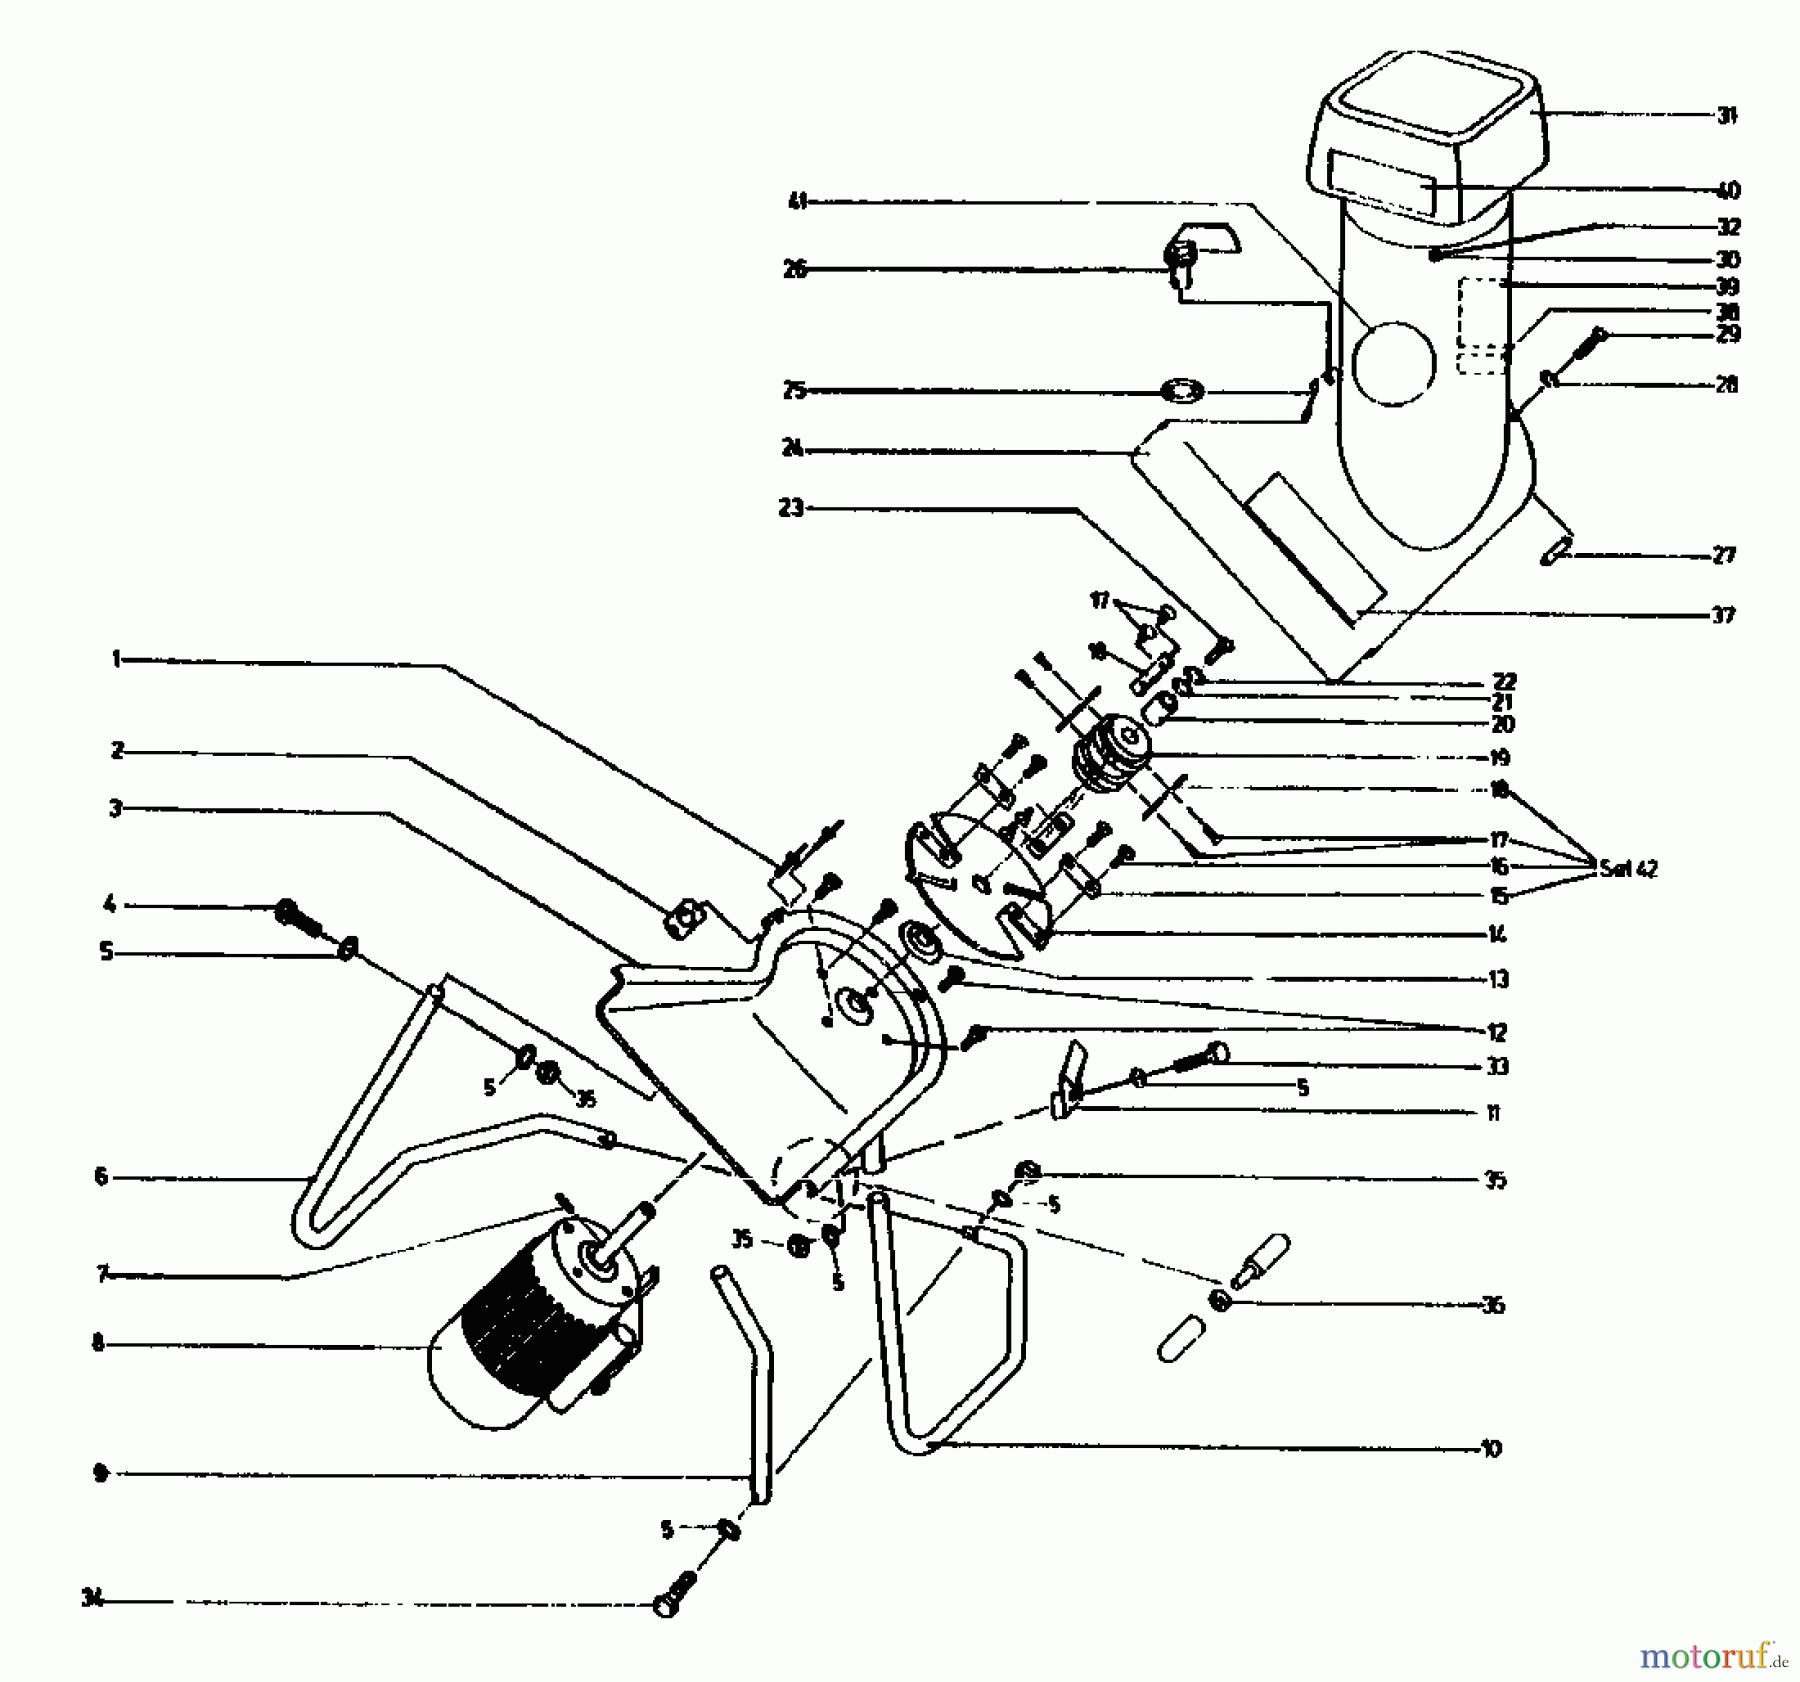  Gutbrod Chipper GAE 18 04002.04  (1990) Basic machine